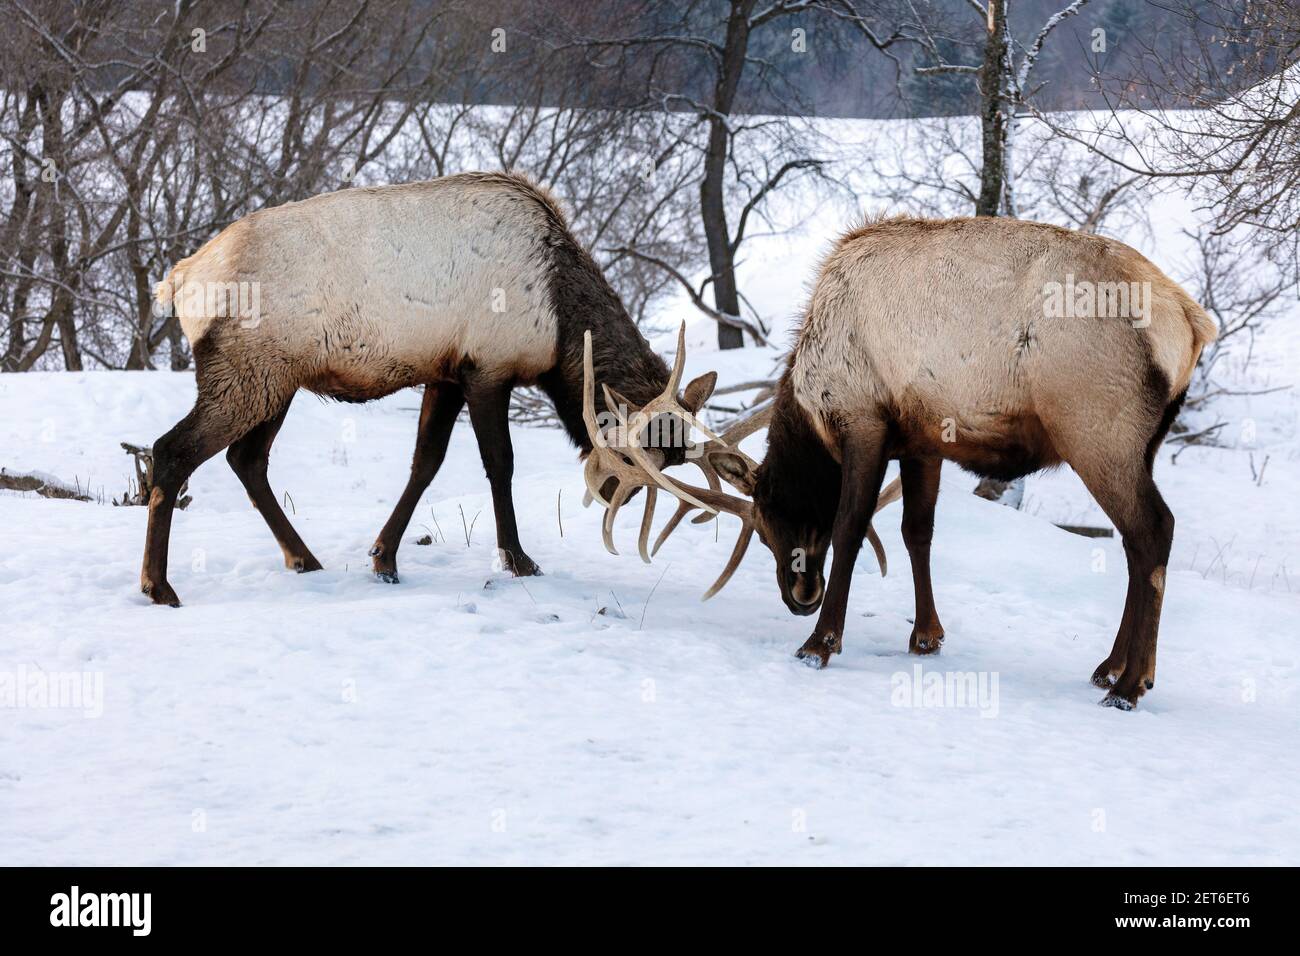 Wapiti, Bull Elk sparring, fighting behavior, (Cervus canadensis), Winter, N. Michigan, USA, by James D Coppinger/Dembinsky Photo Assoc Stock Photo